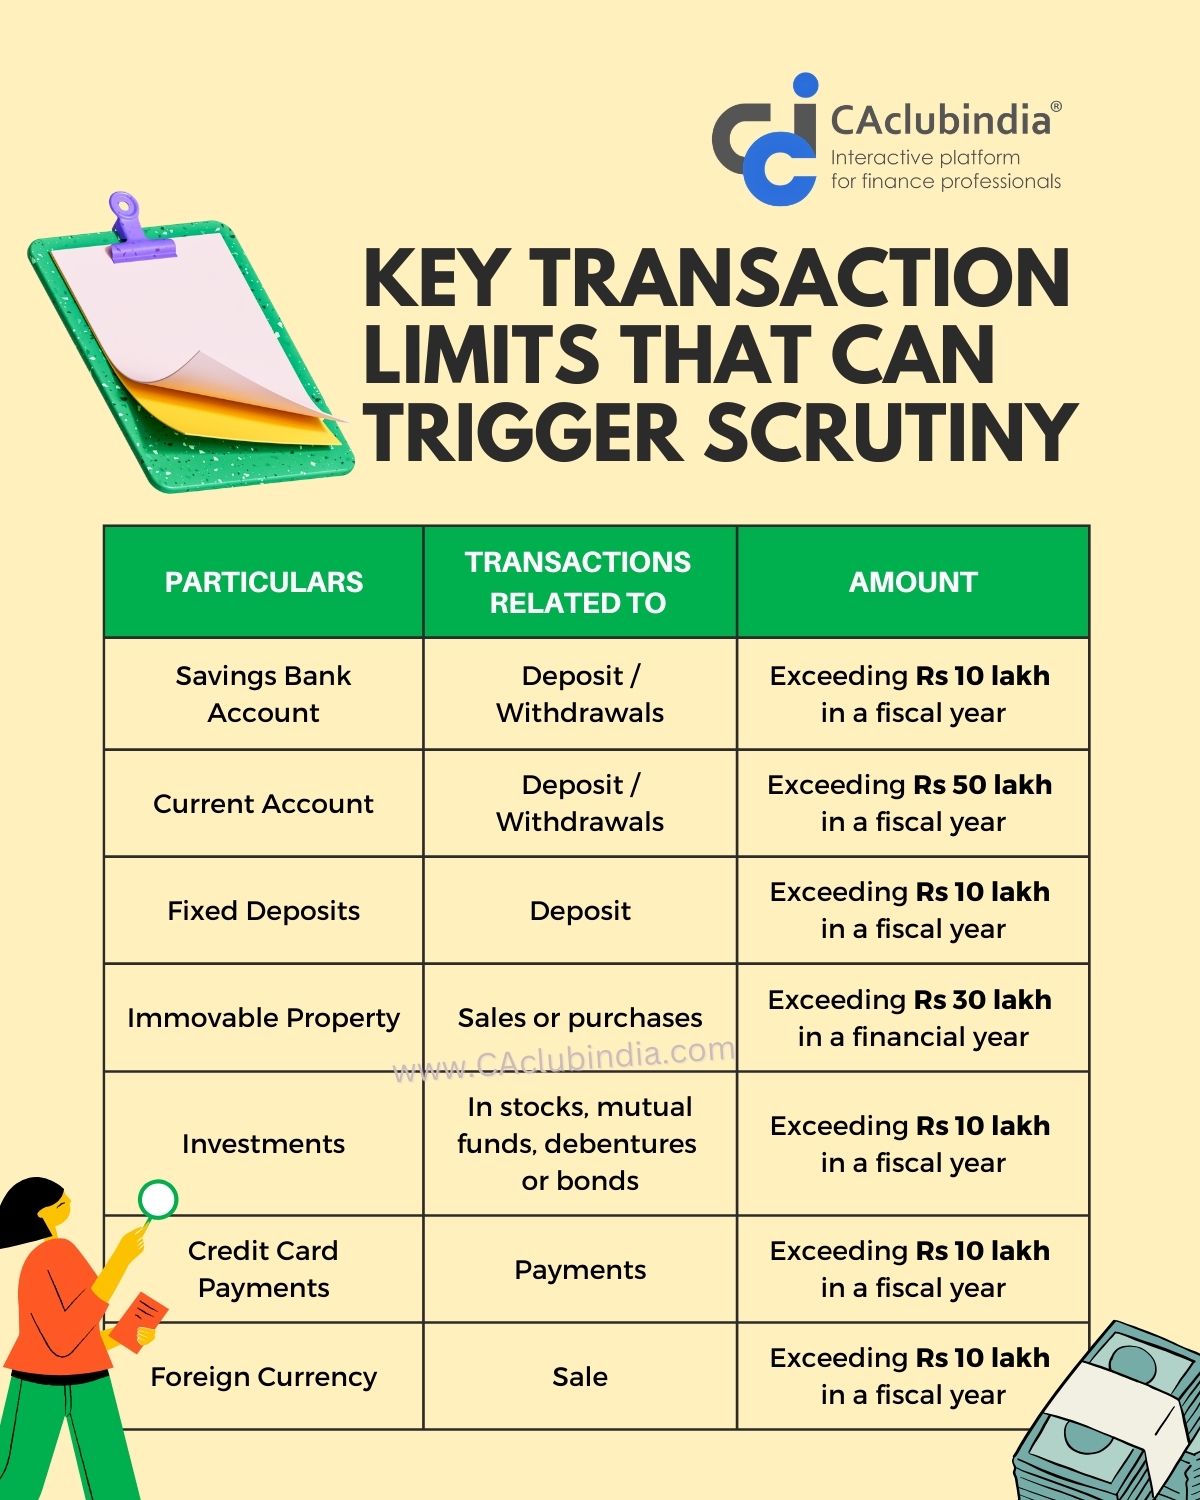 Key Transaction Limits that can trigger scrutiny